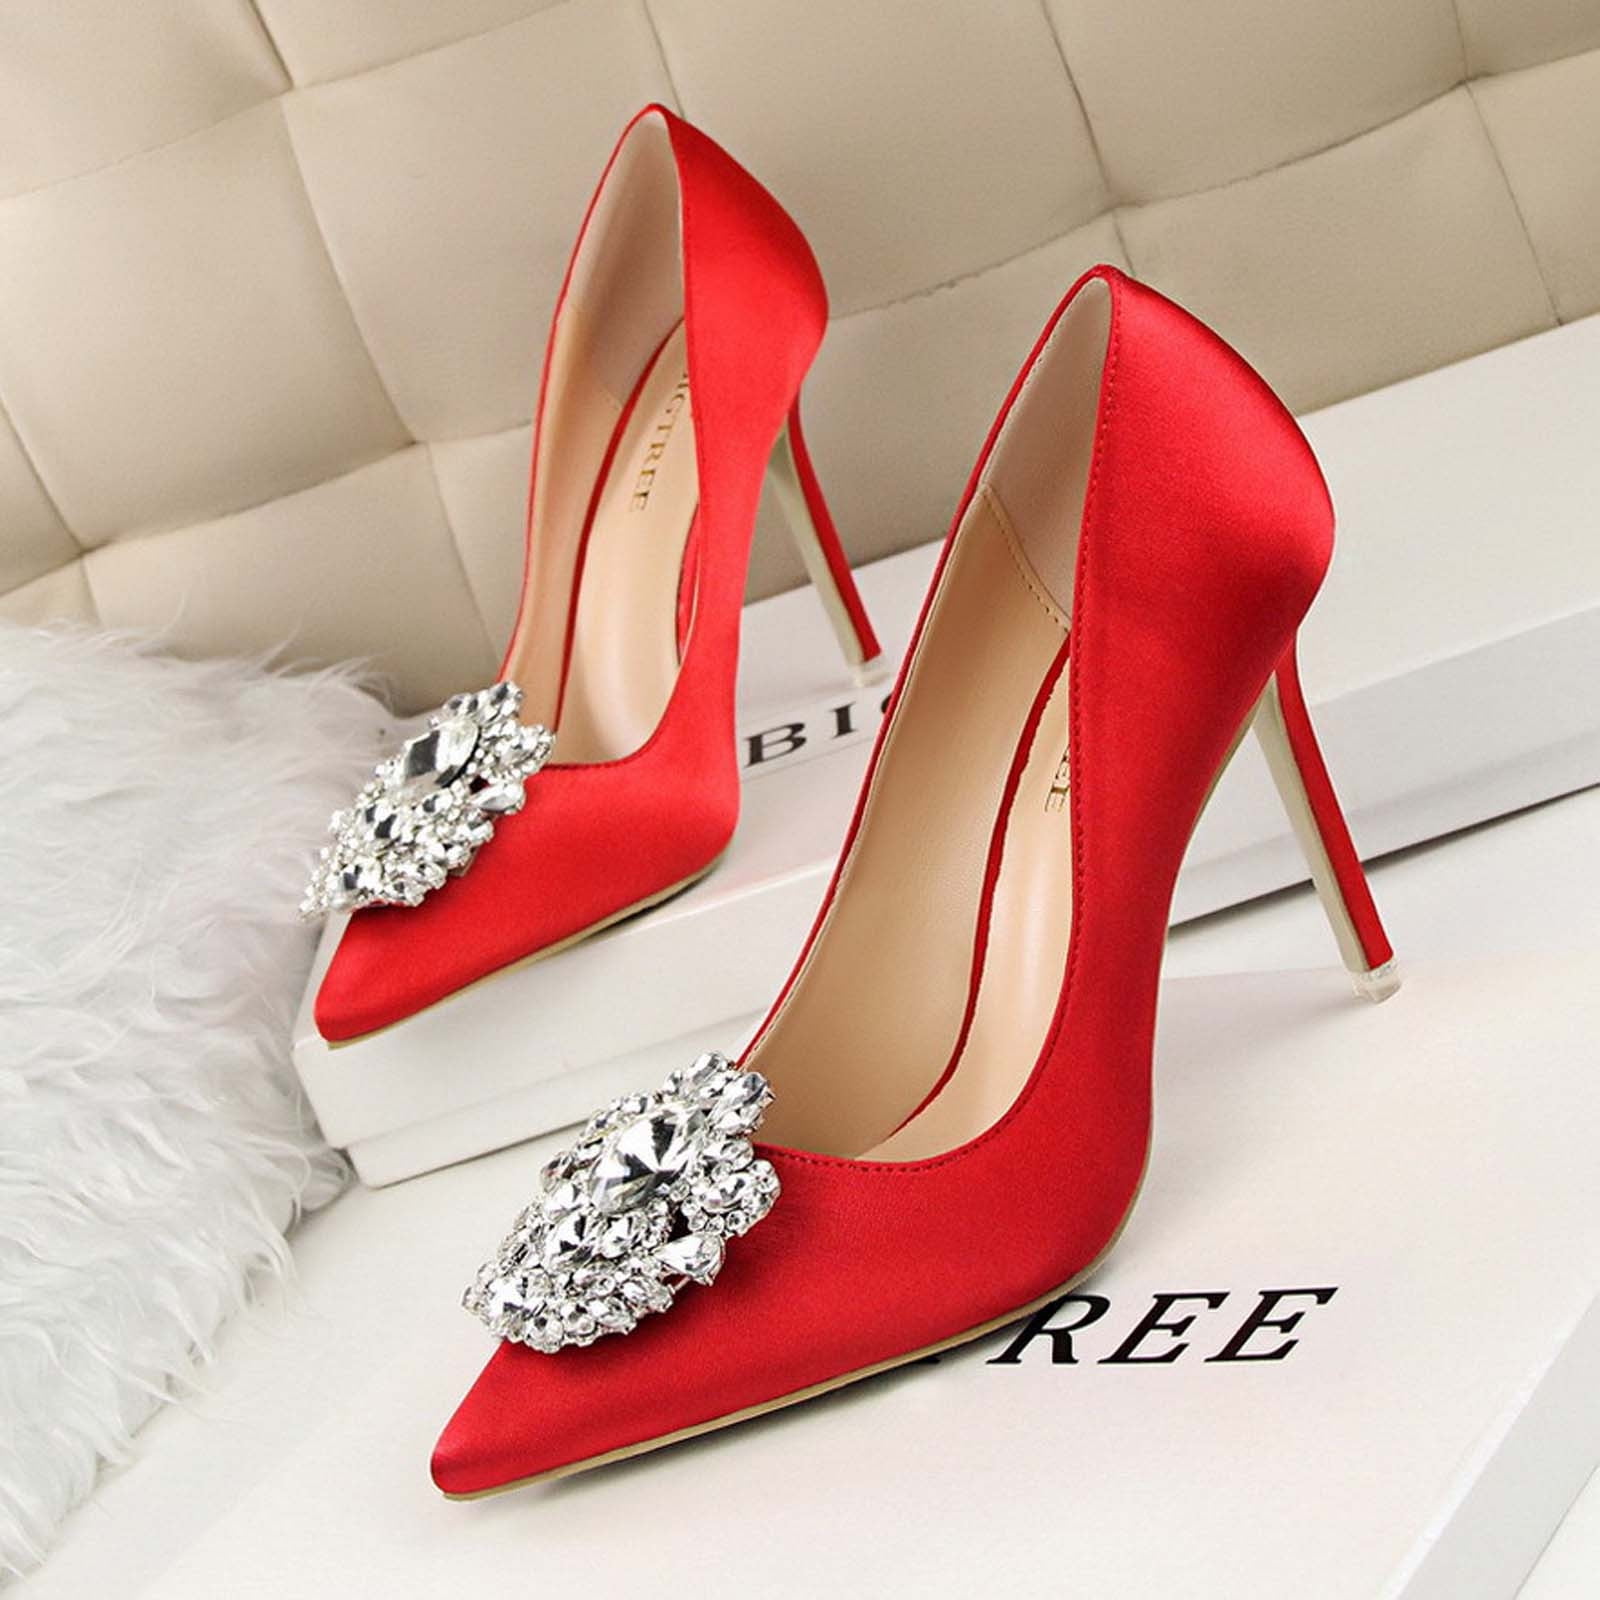 Red Stiletto Pumps Women Shoes | Red Stiletto Shoes Lacing | Stiletto Shoes  Red Toes - Pumps - Aliexpress